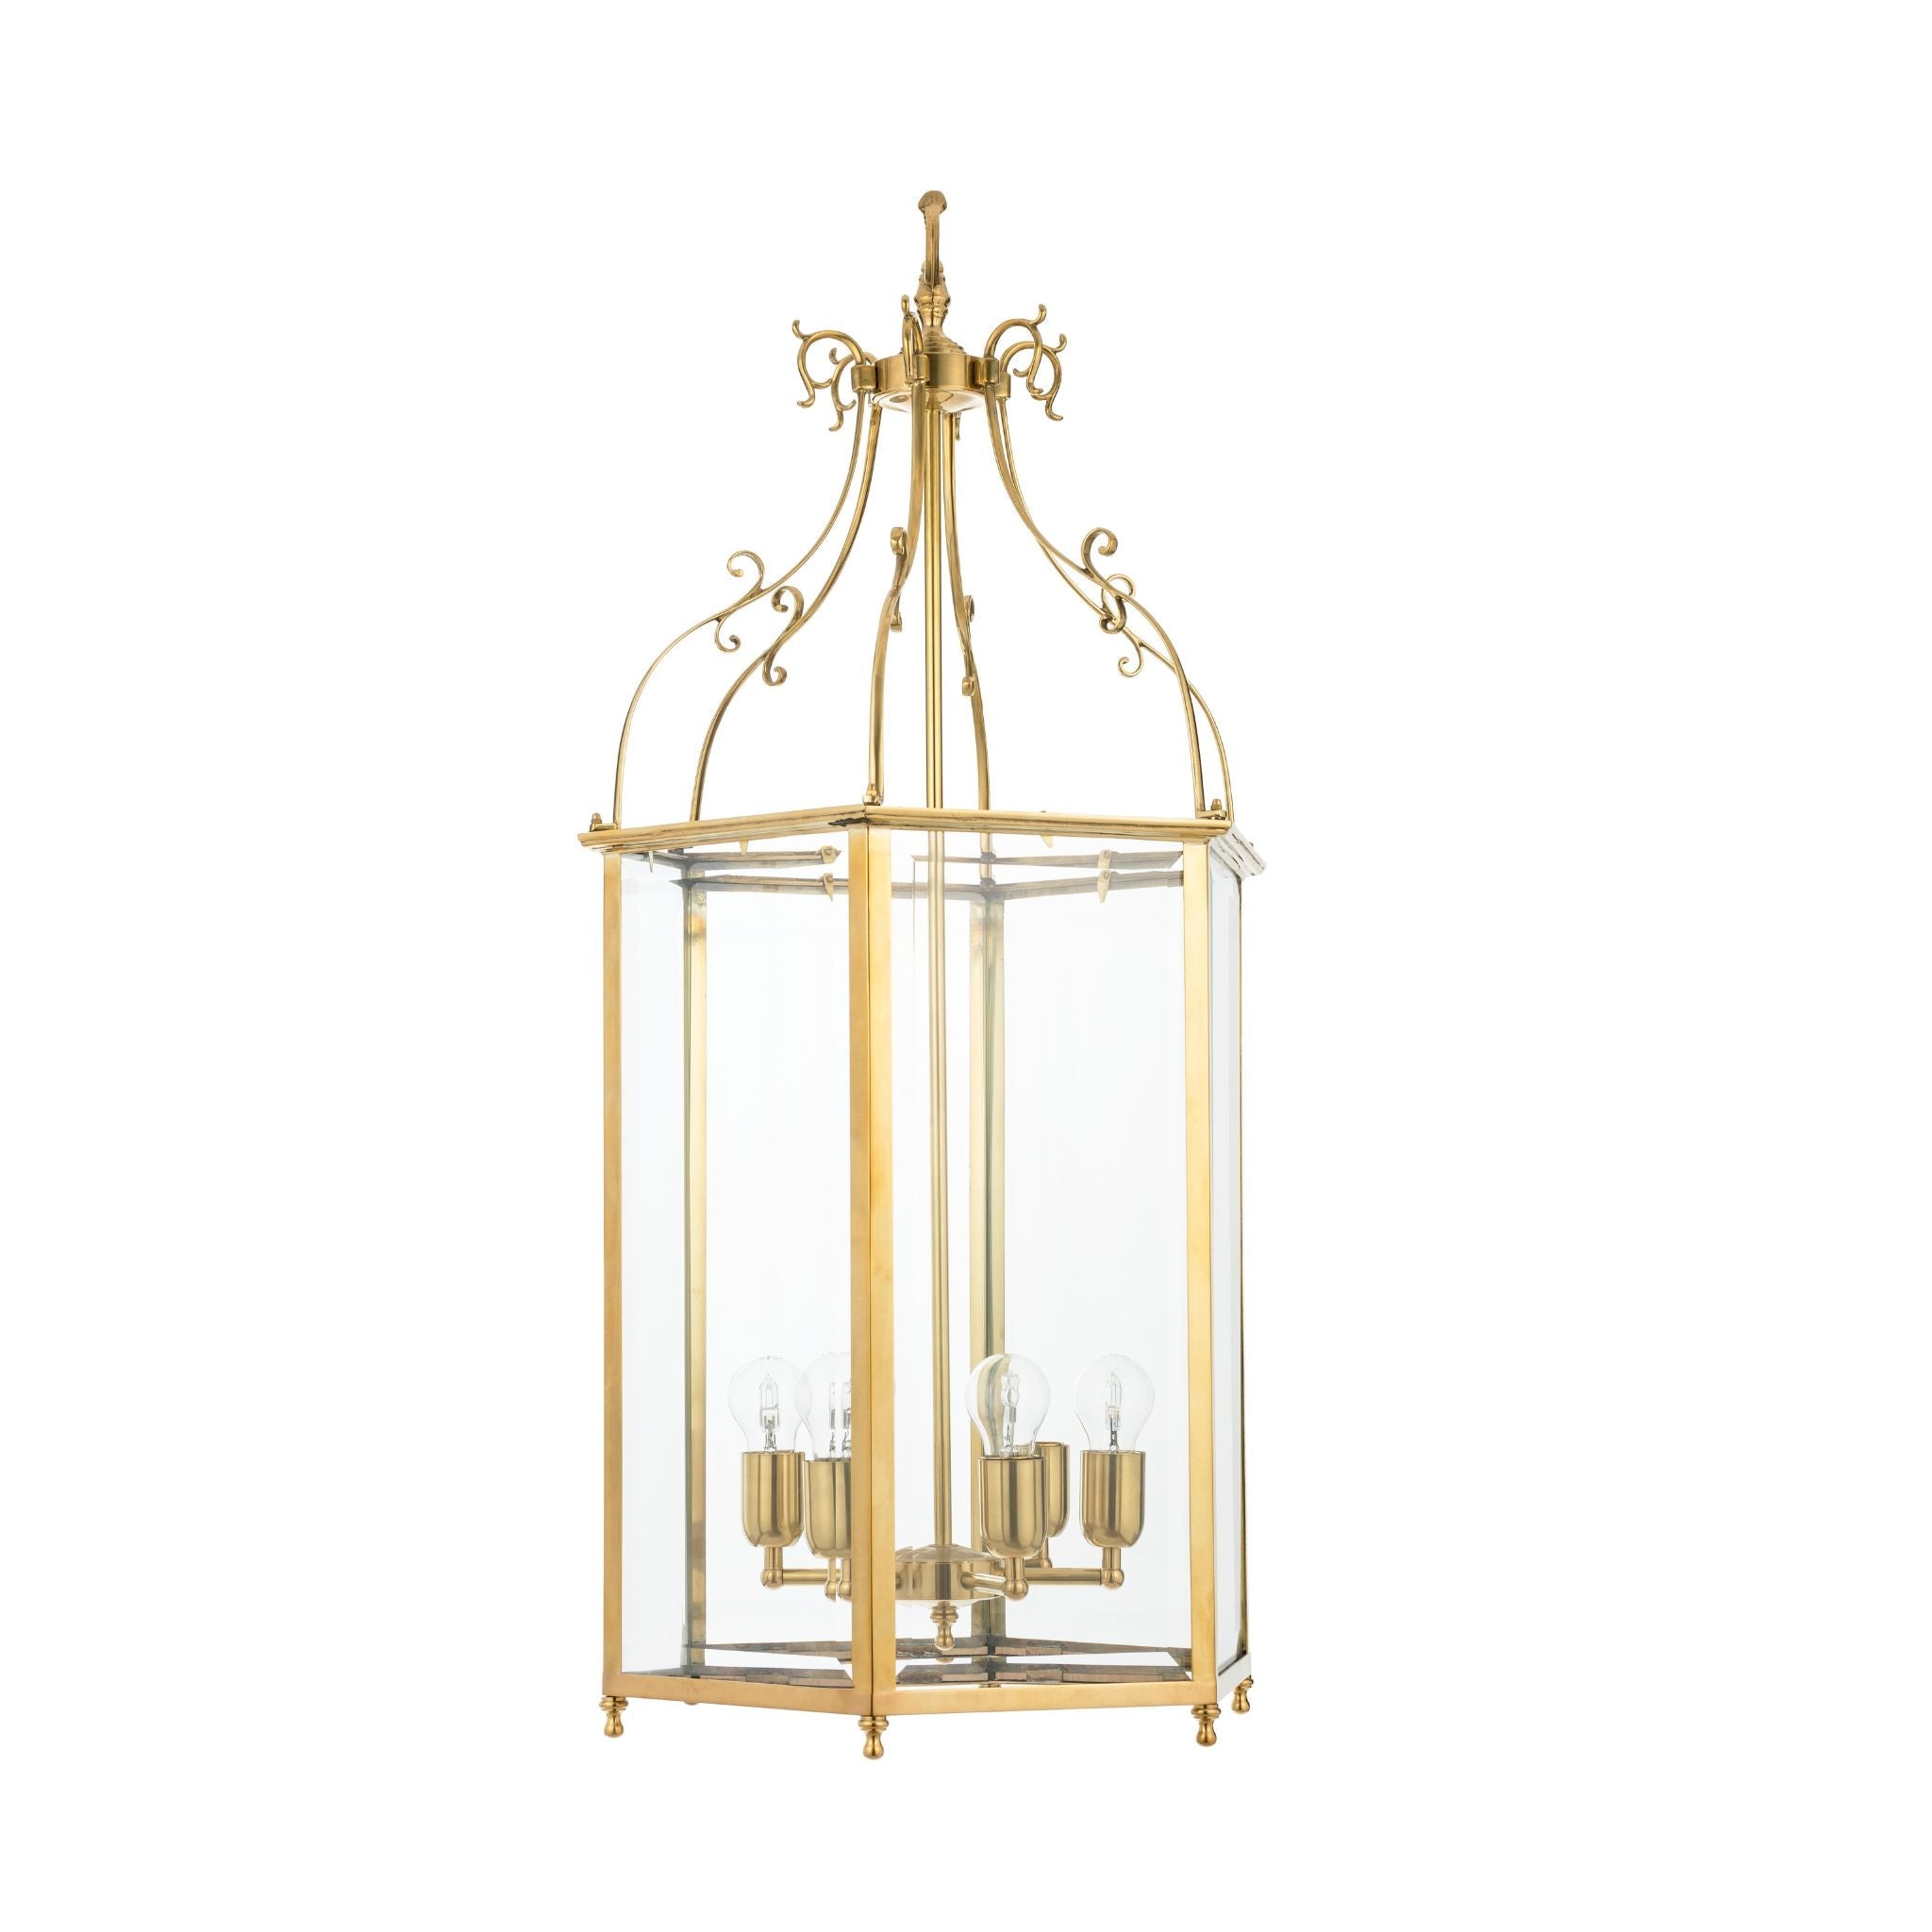 Novecento brass hexagonal hanging lantern - ilbronzetto